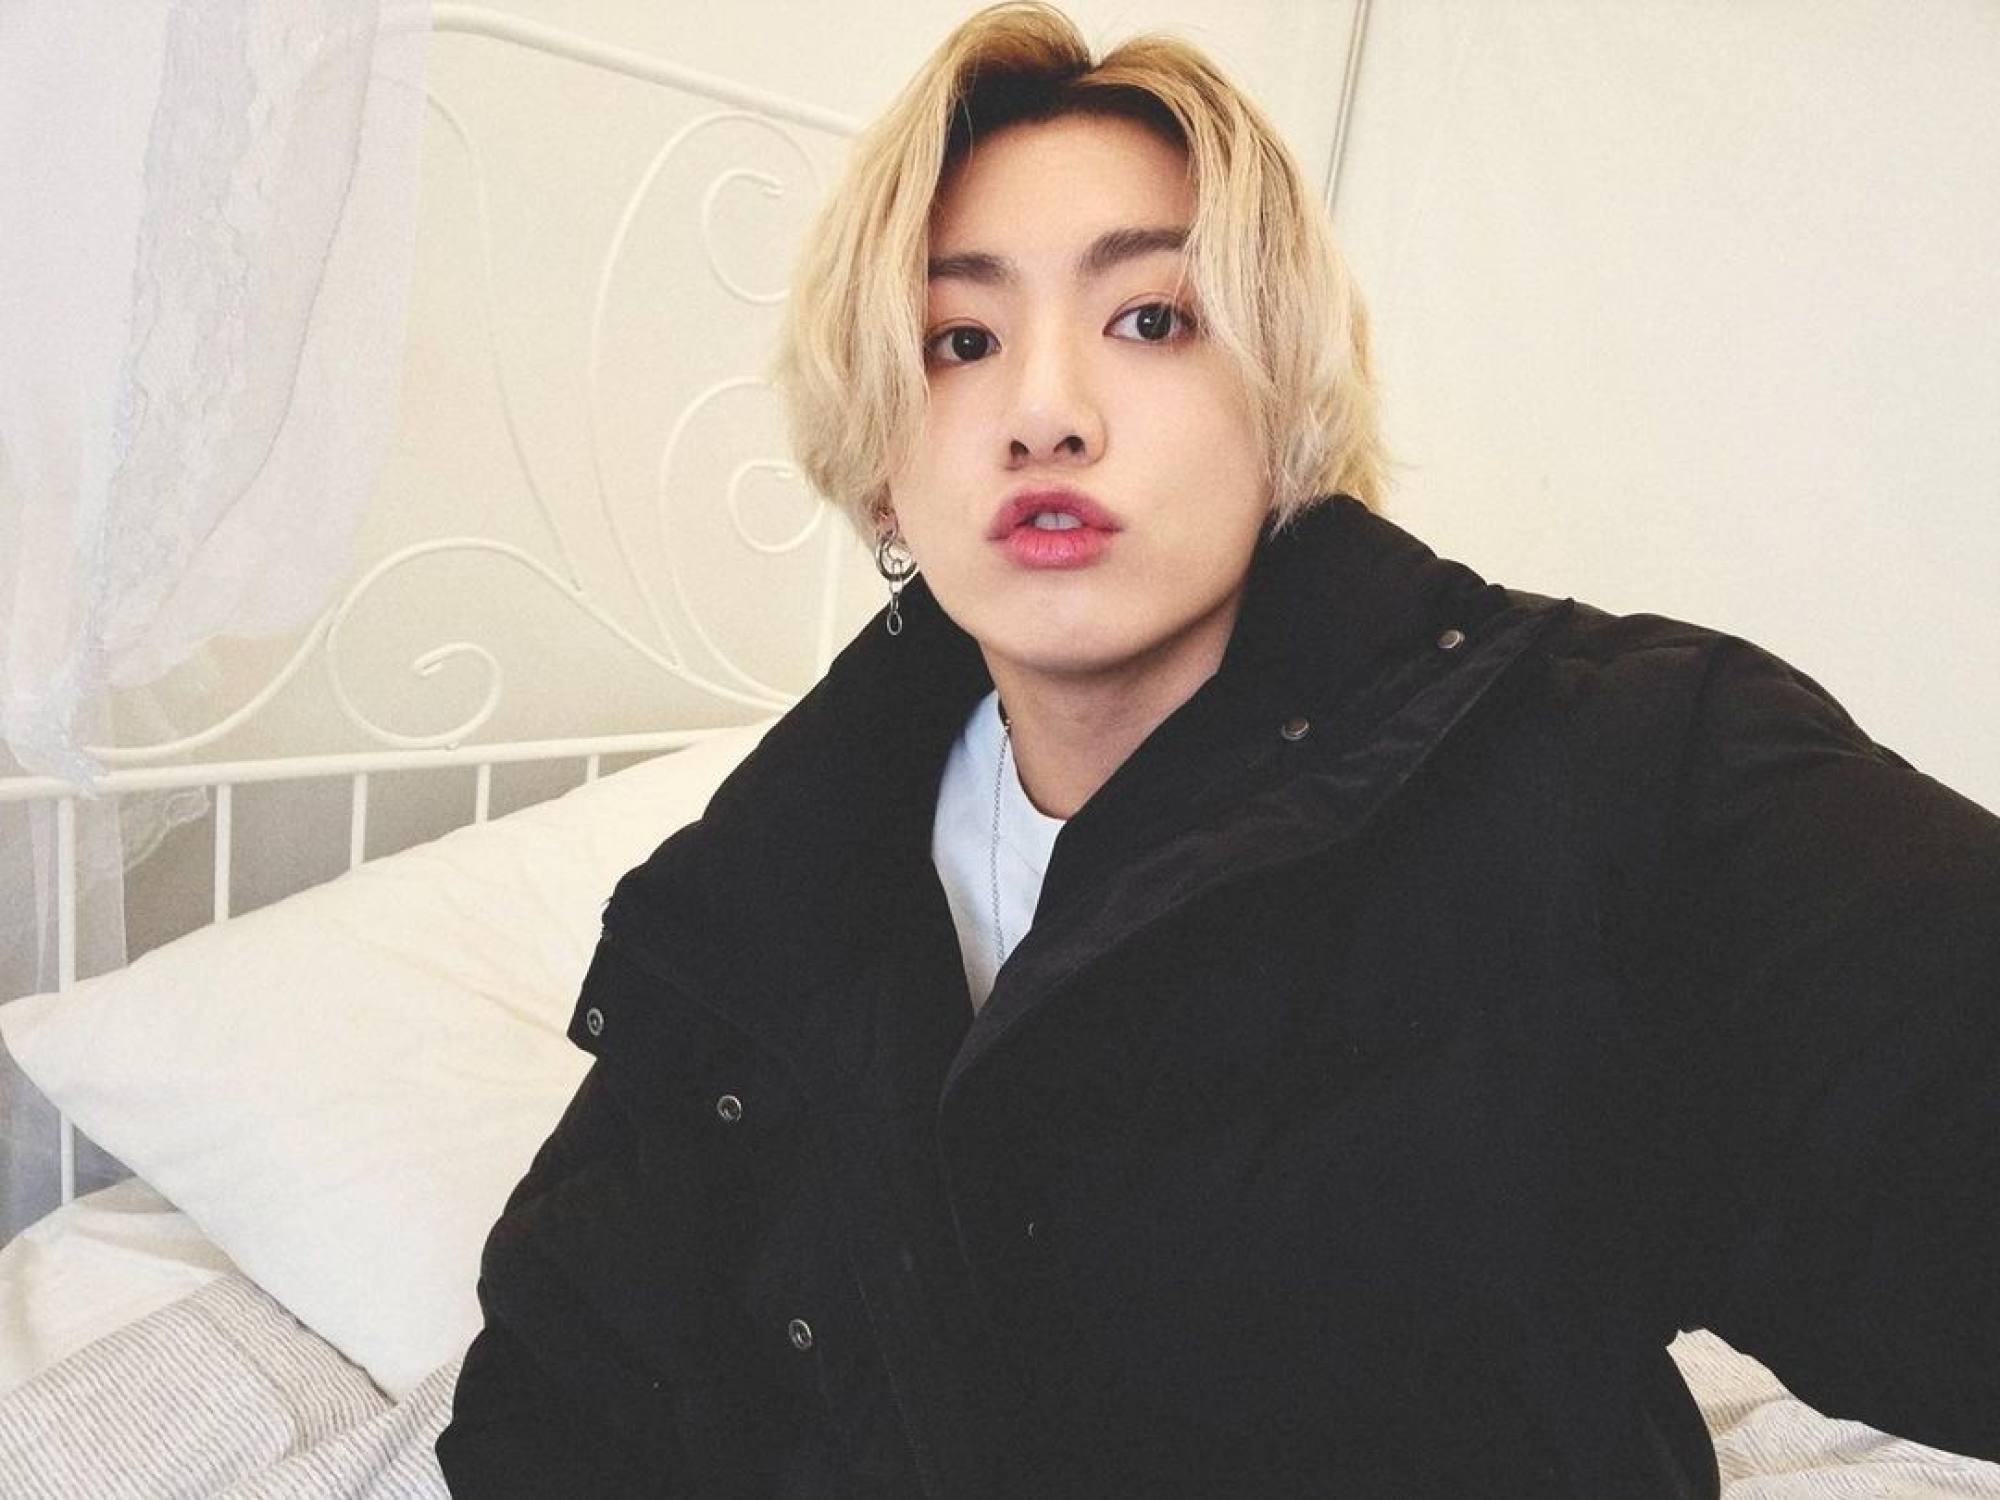 BTS member Jungkook. Photo: @bts.jungkook/Instagram